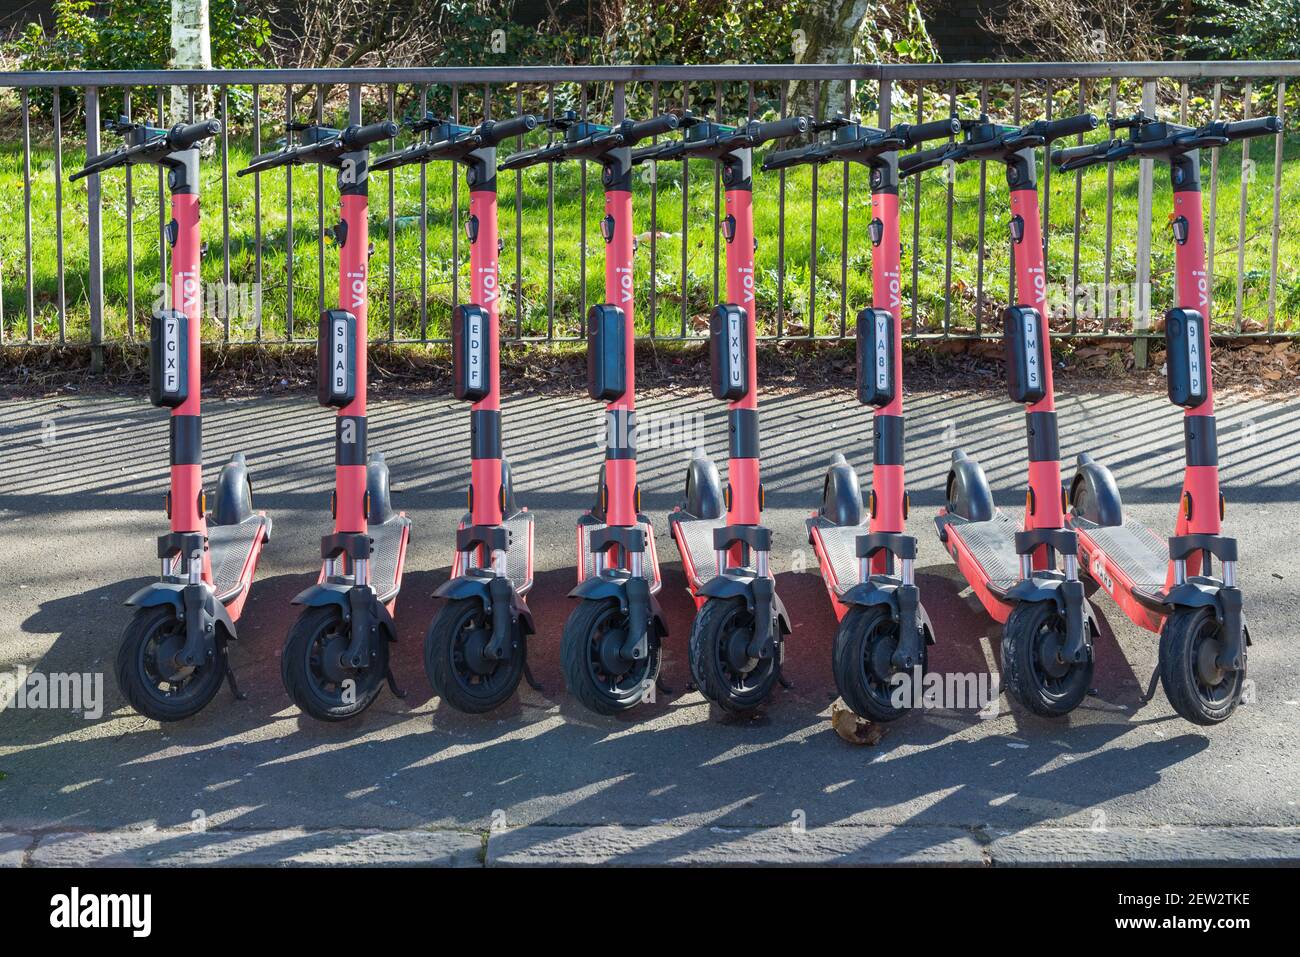 Row of 8 voi. electric scooters awaiting hire in Edgbaston, Birmingham, UK Stock Photo